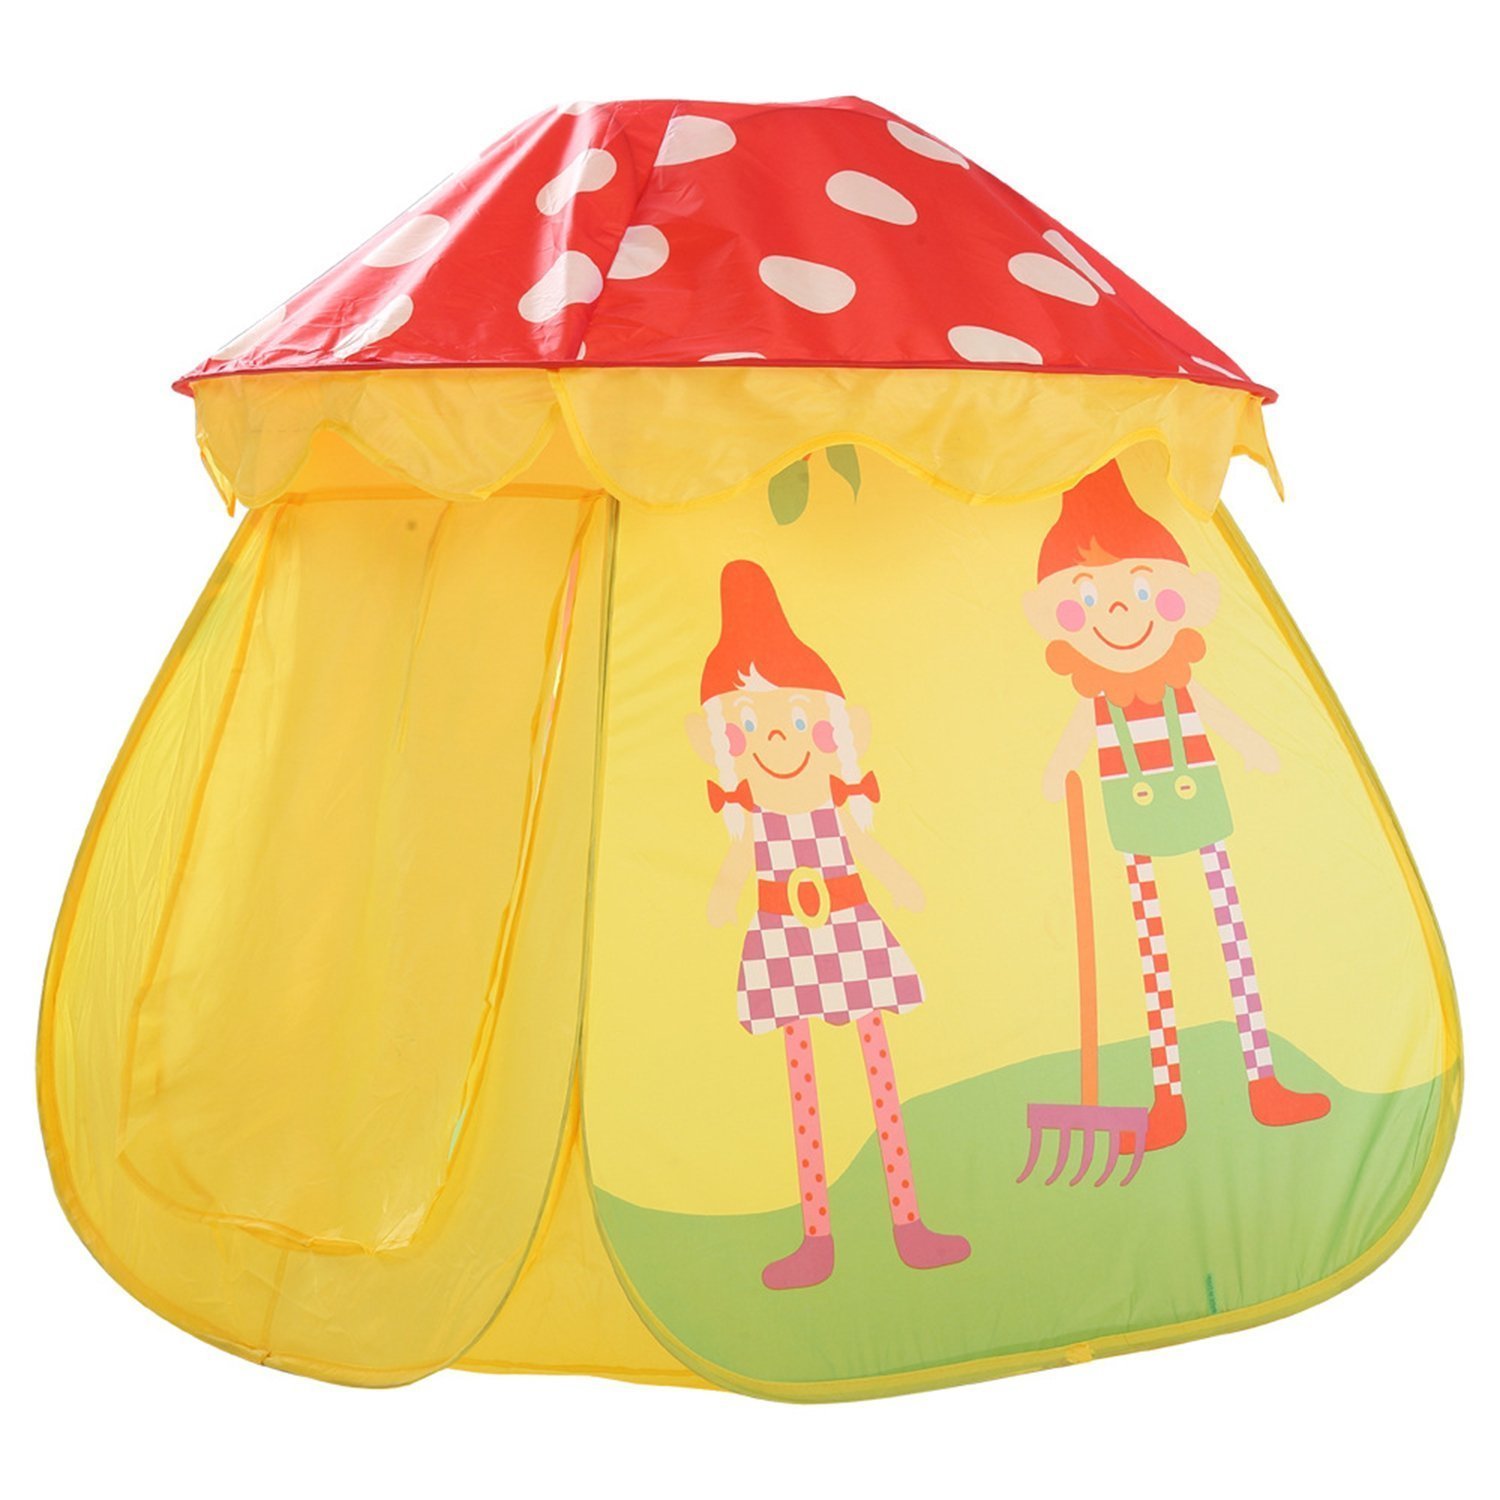 Mushroom Pop up Play House Tent